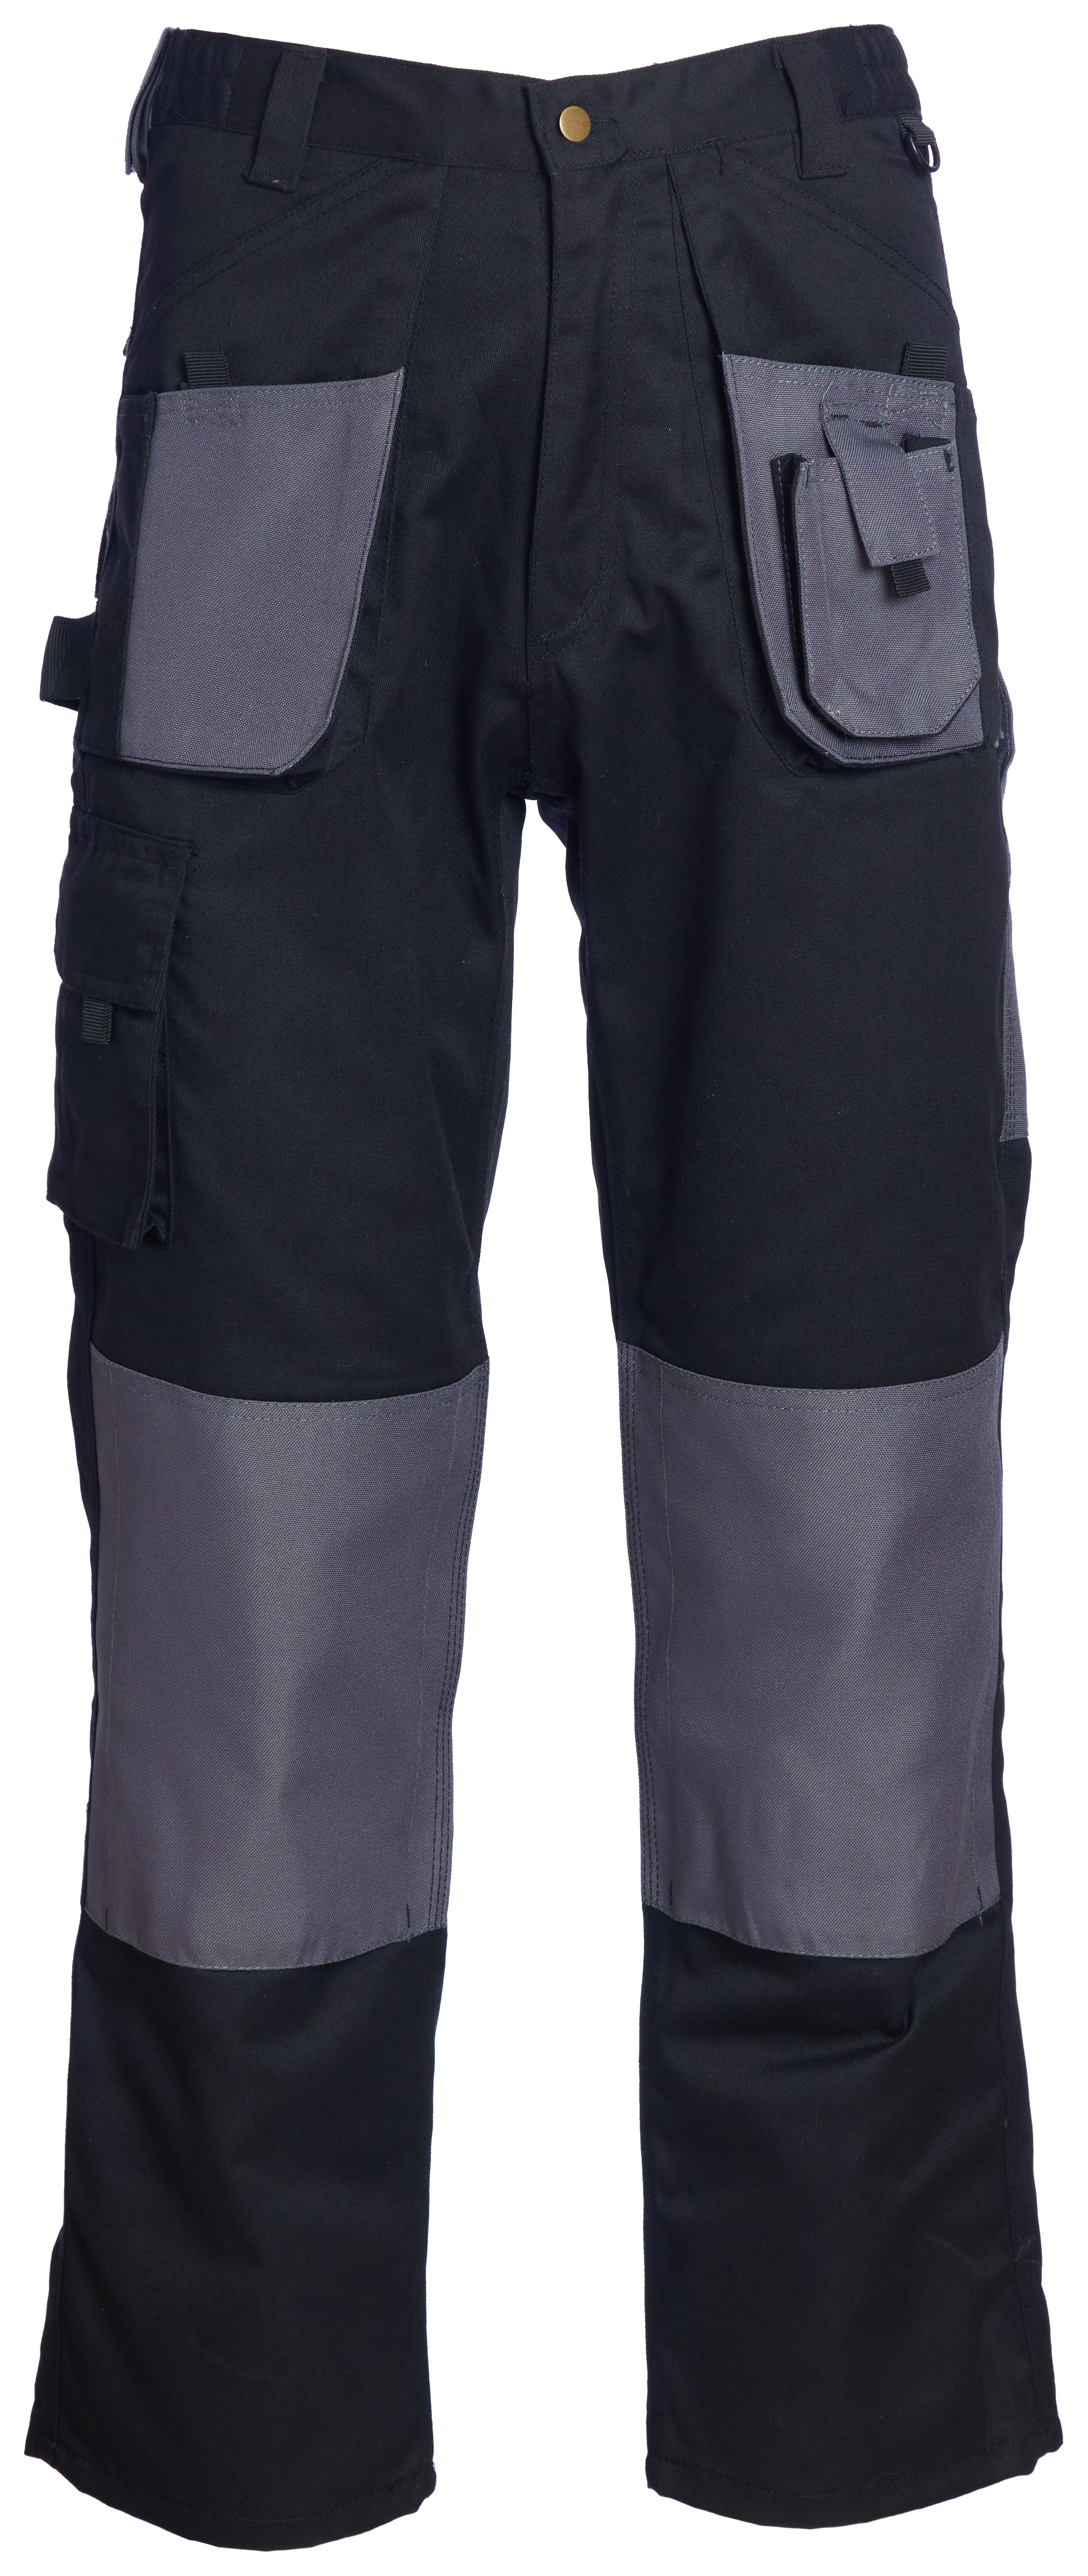 Image of Blackrock Black & Grey Work Trousers - 36W 31L